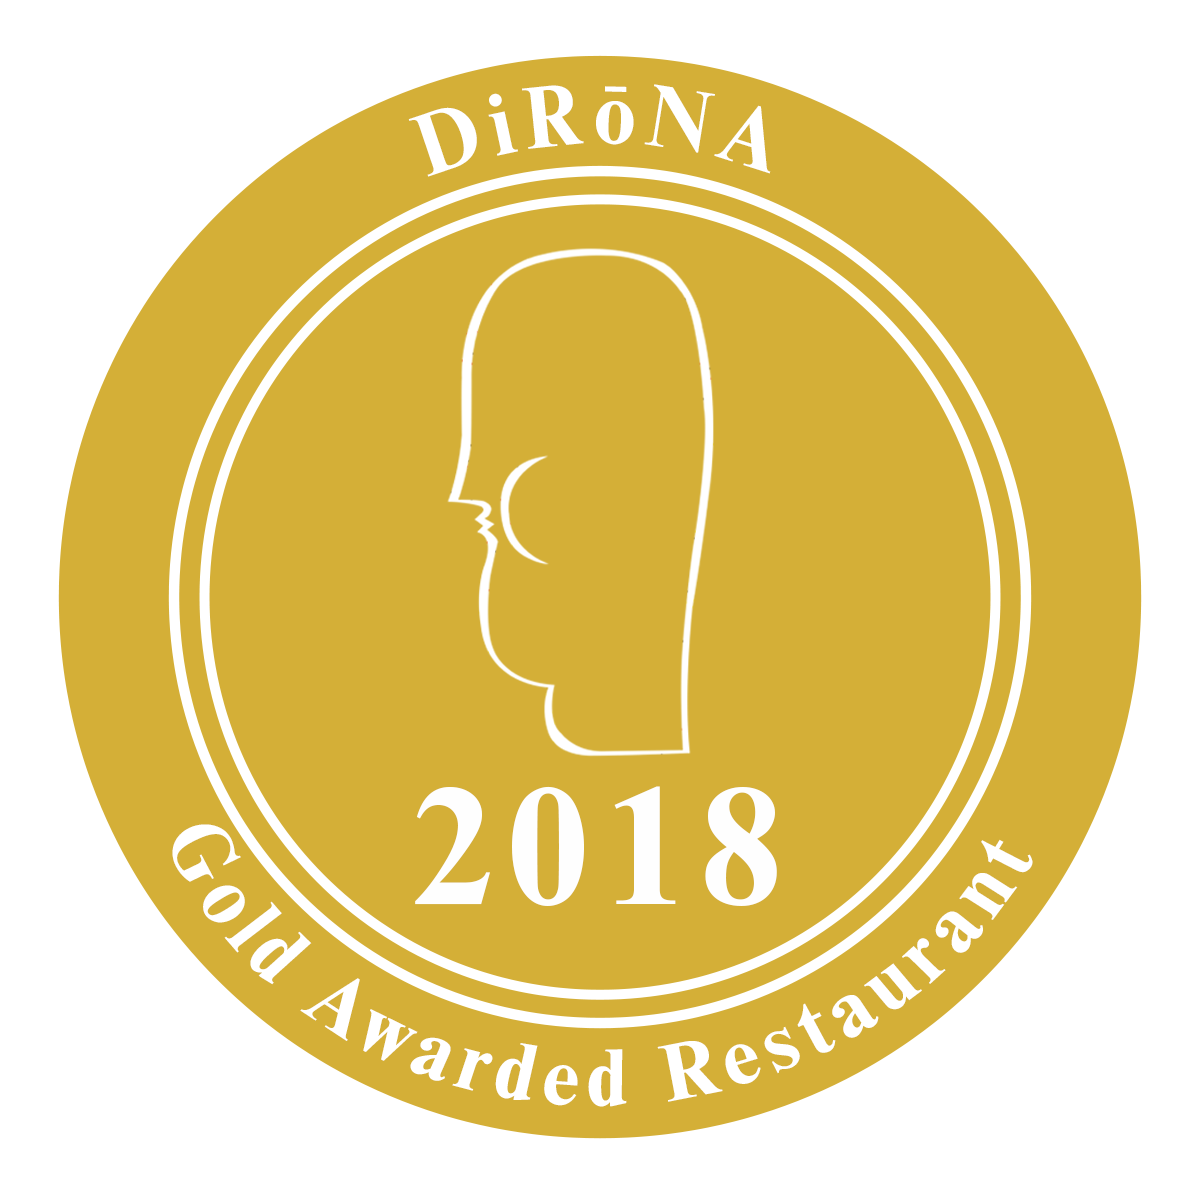 DiRoNA Awarded Restaurant Distinguished Restaurants of North America Since 2018 Badge